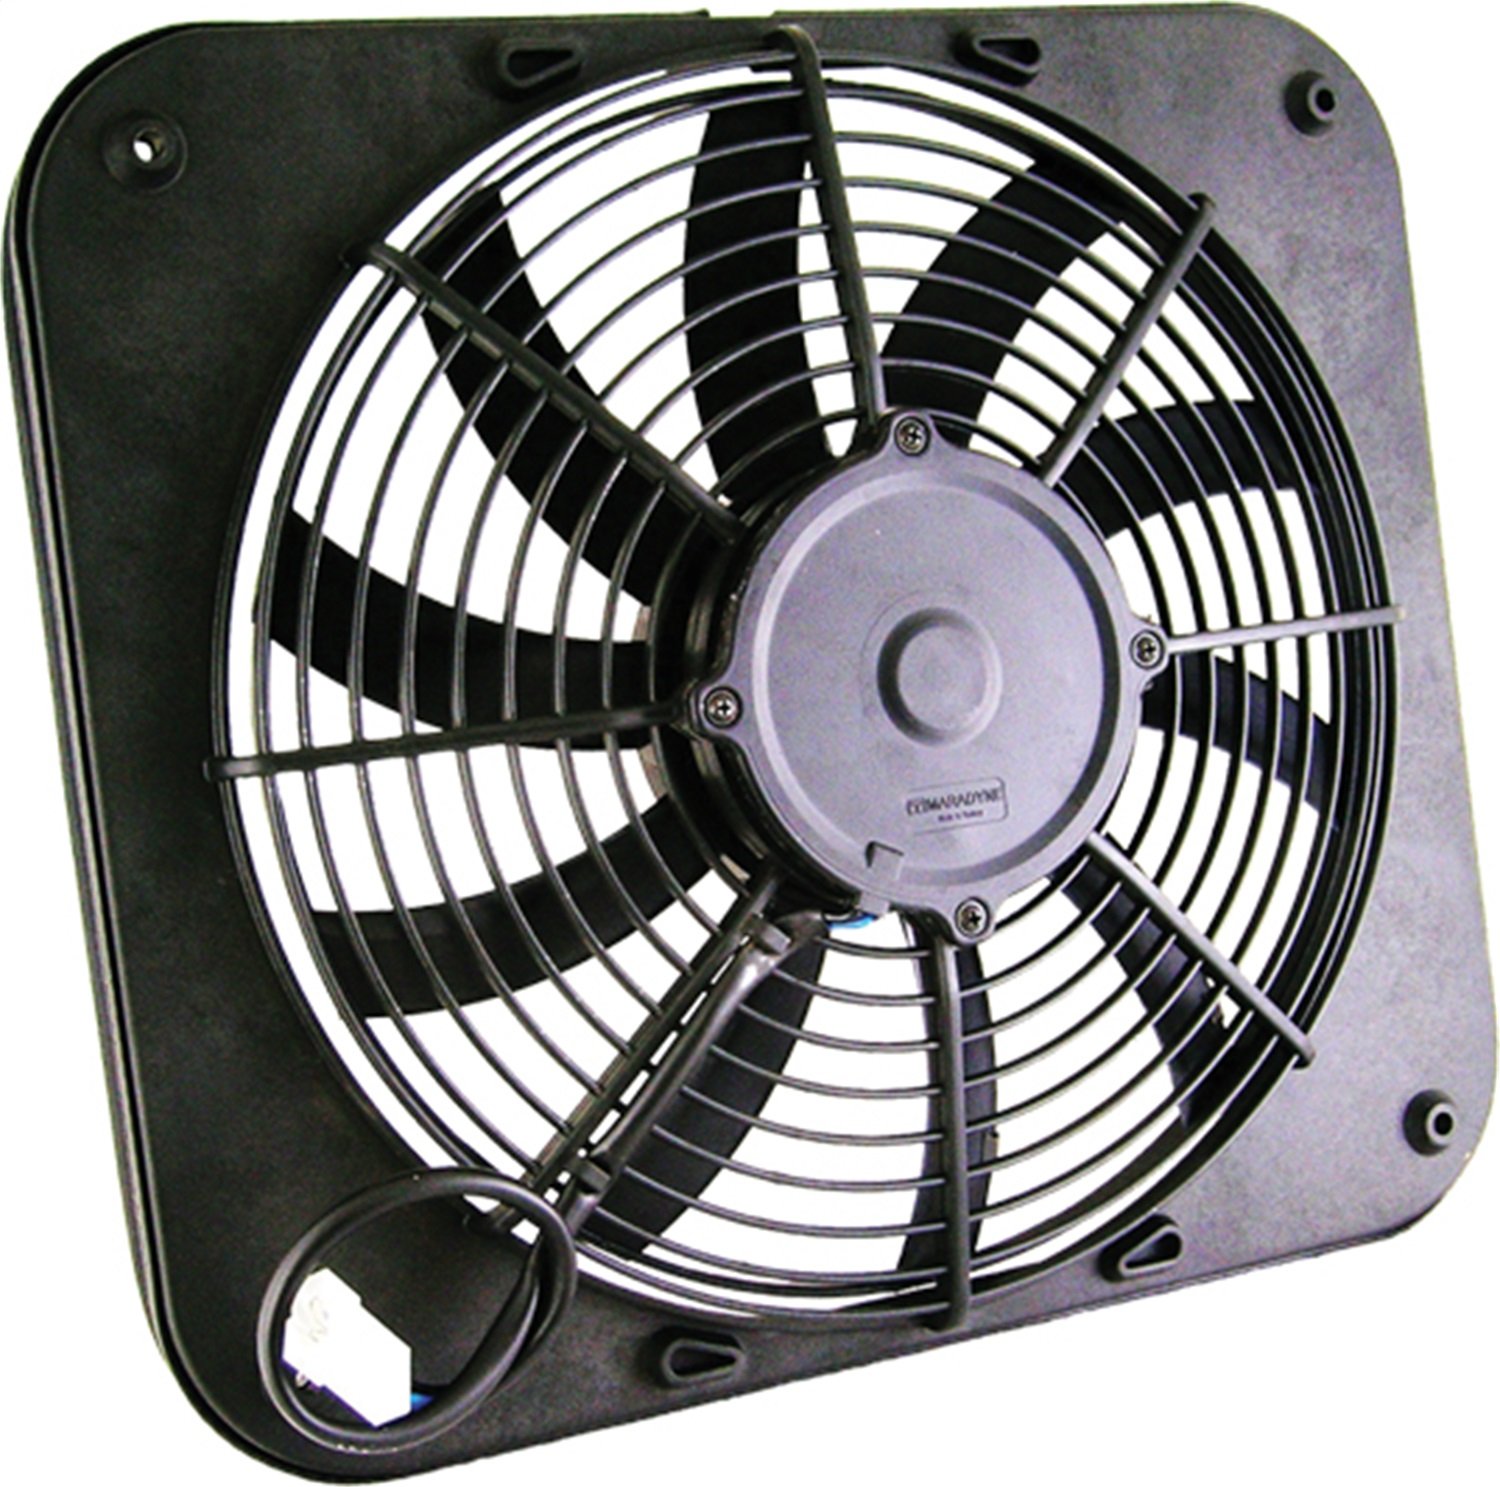 Jetstreme I Series Electric Cooling Fan, Diameter: 16